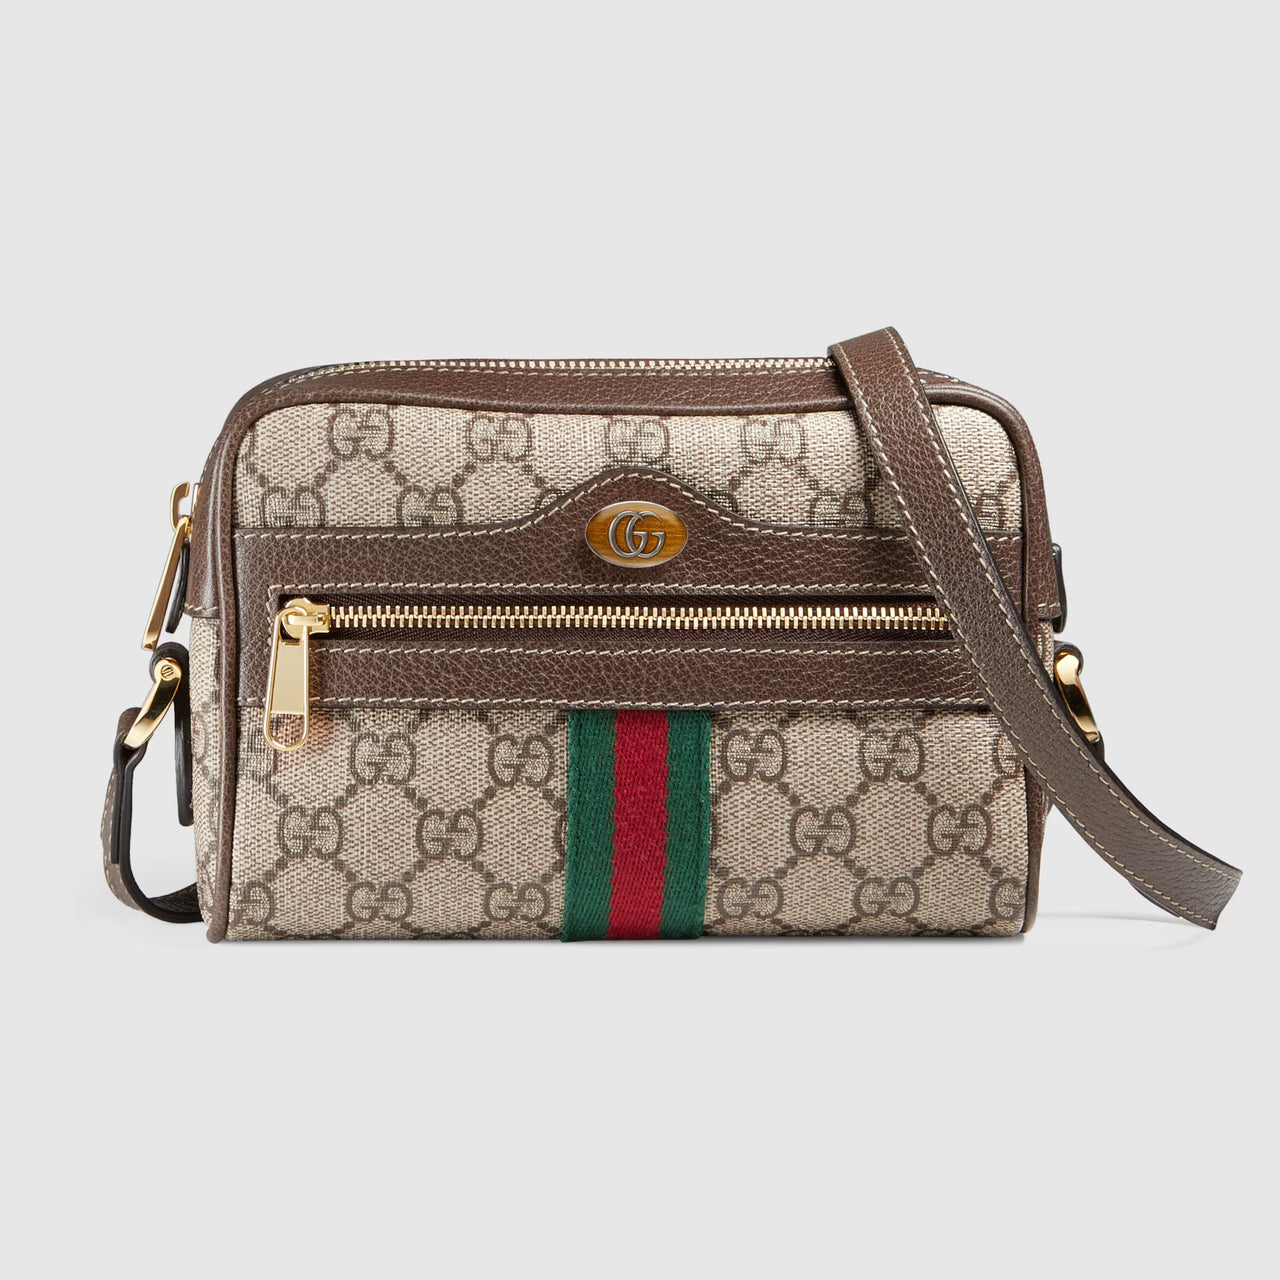 Gucci GG Ophidia GG Supreme Mini Bag (Beige & Ebony)